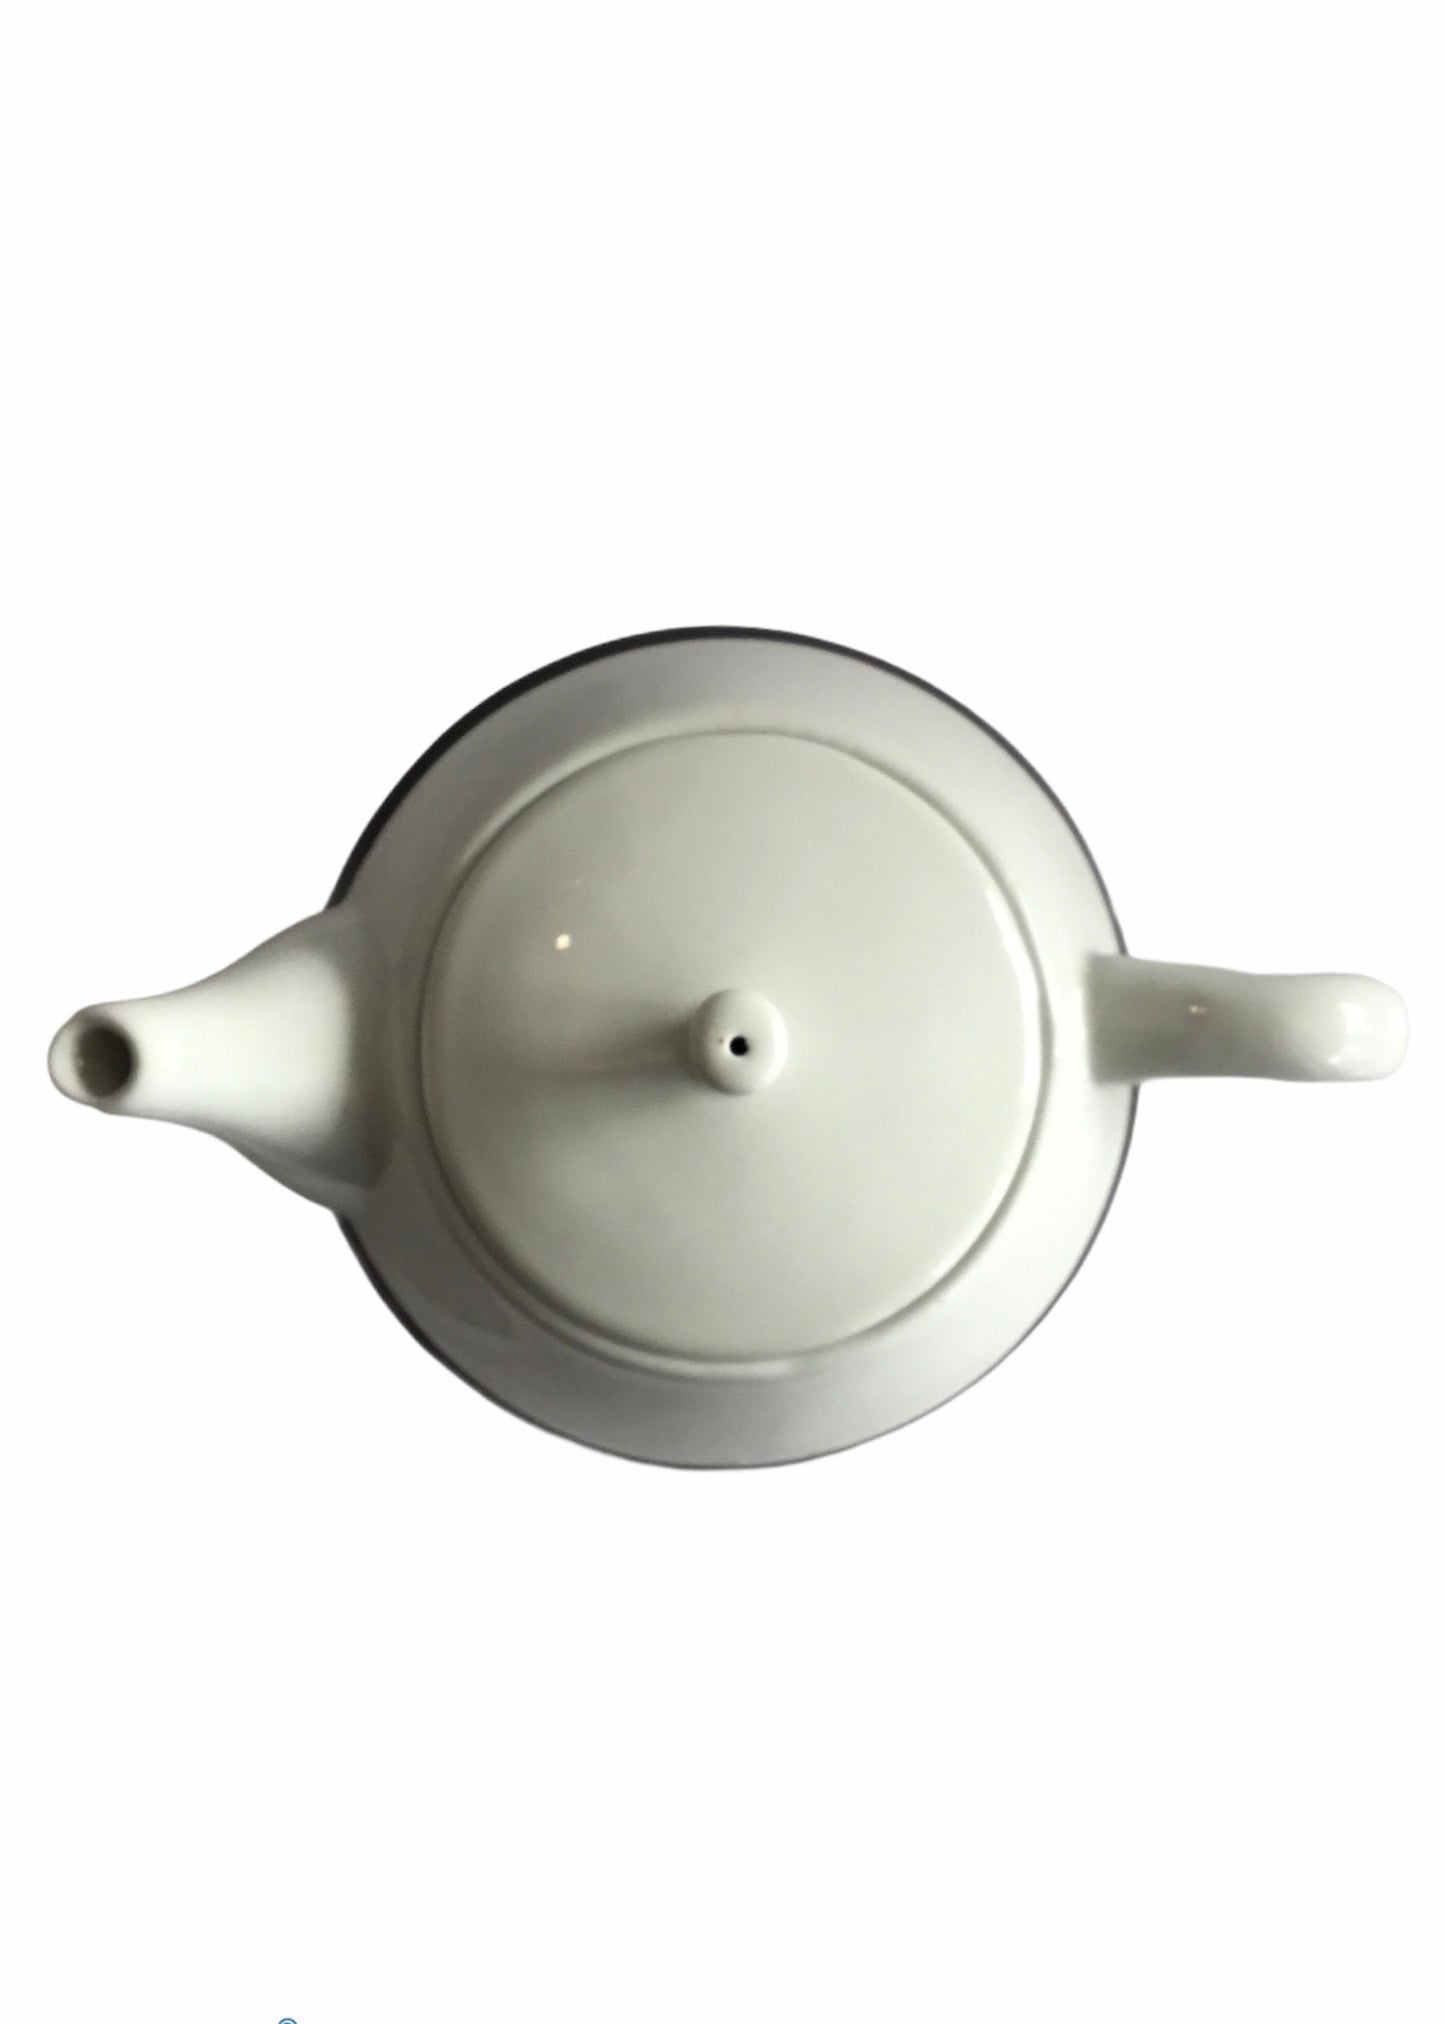 Broste - Esrum Teapot for One